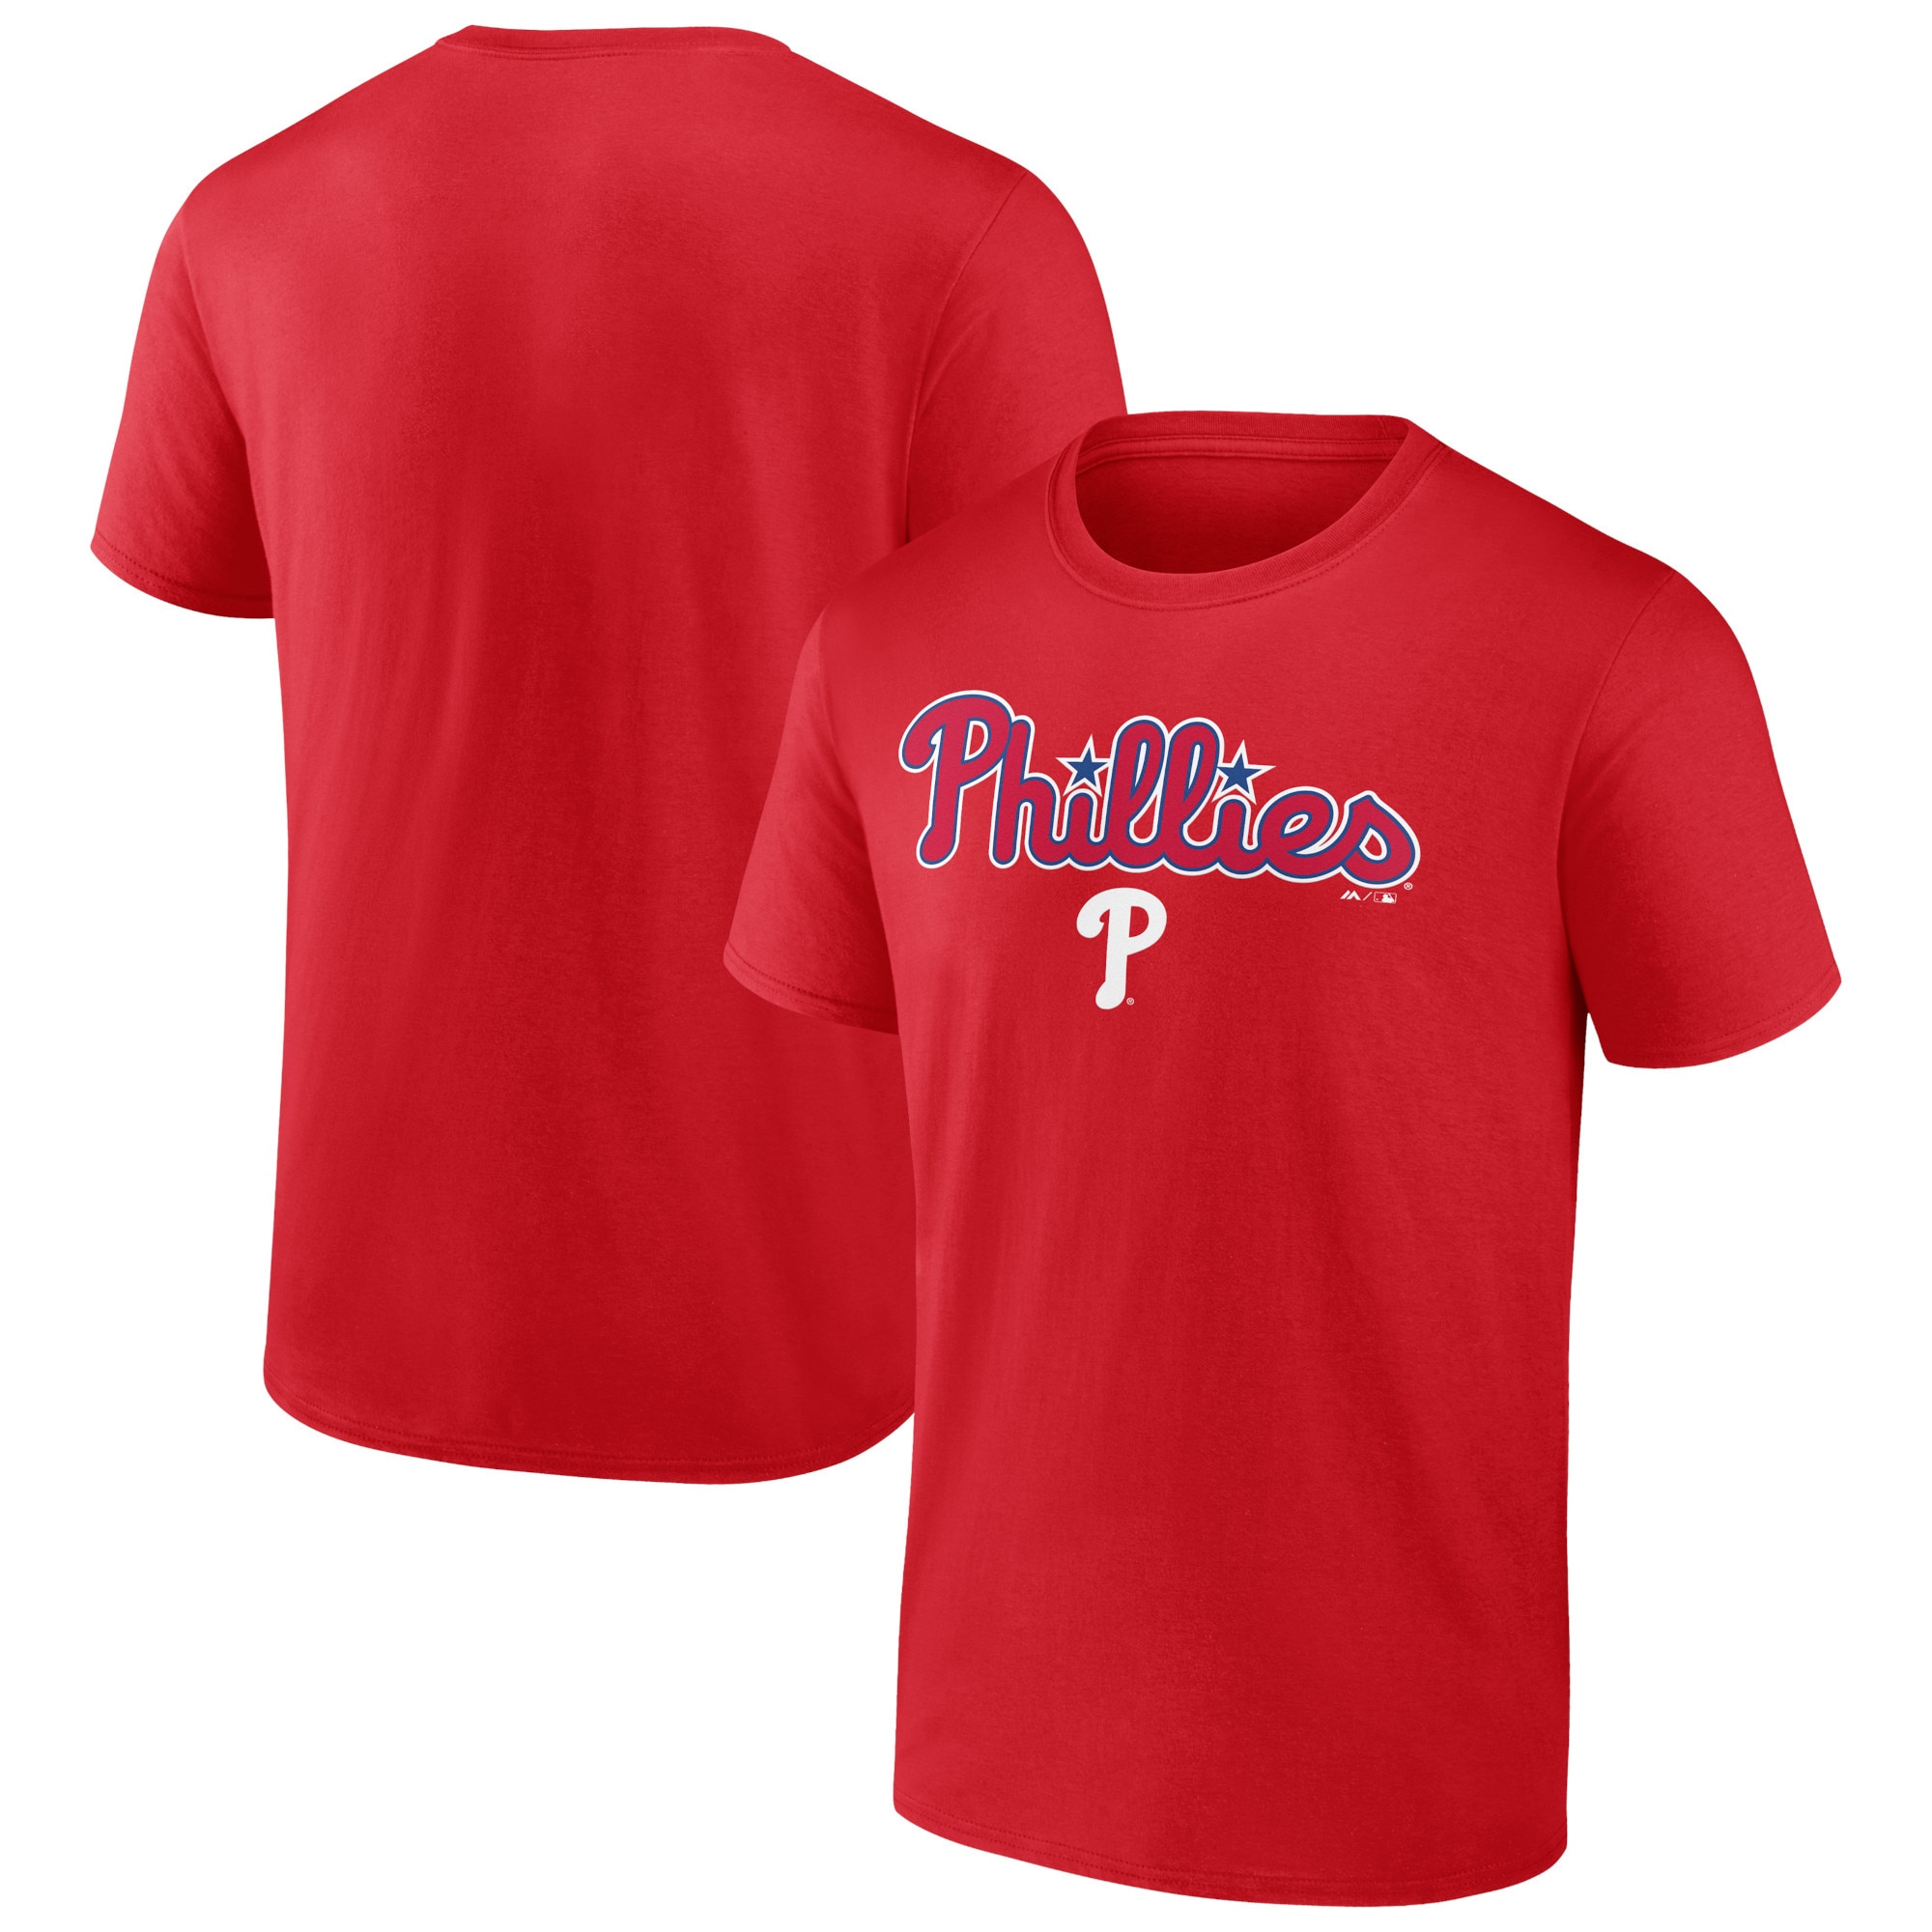 Men's Red Philadelphia Phillies Team Primary Logo T-Shirt - image 1 of 3